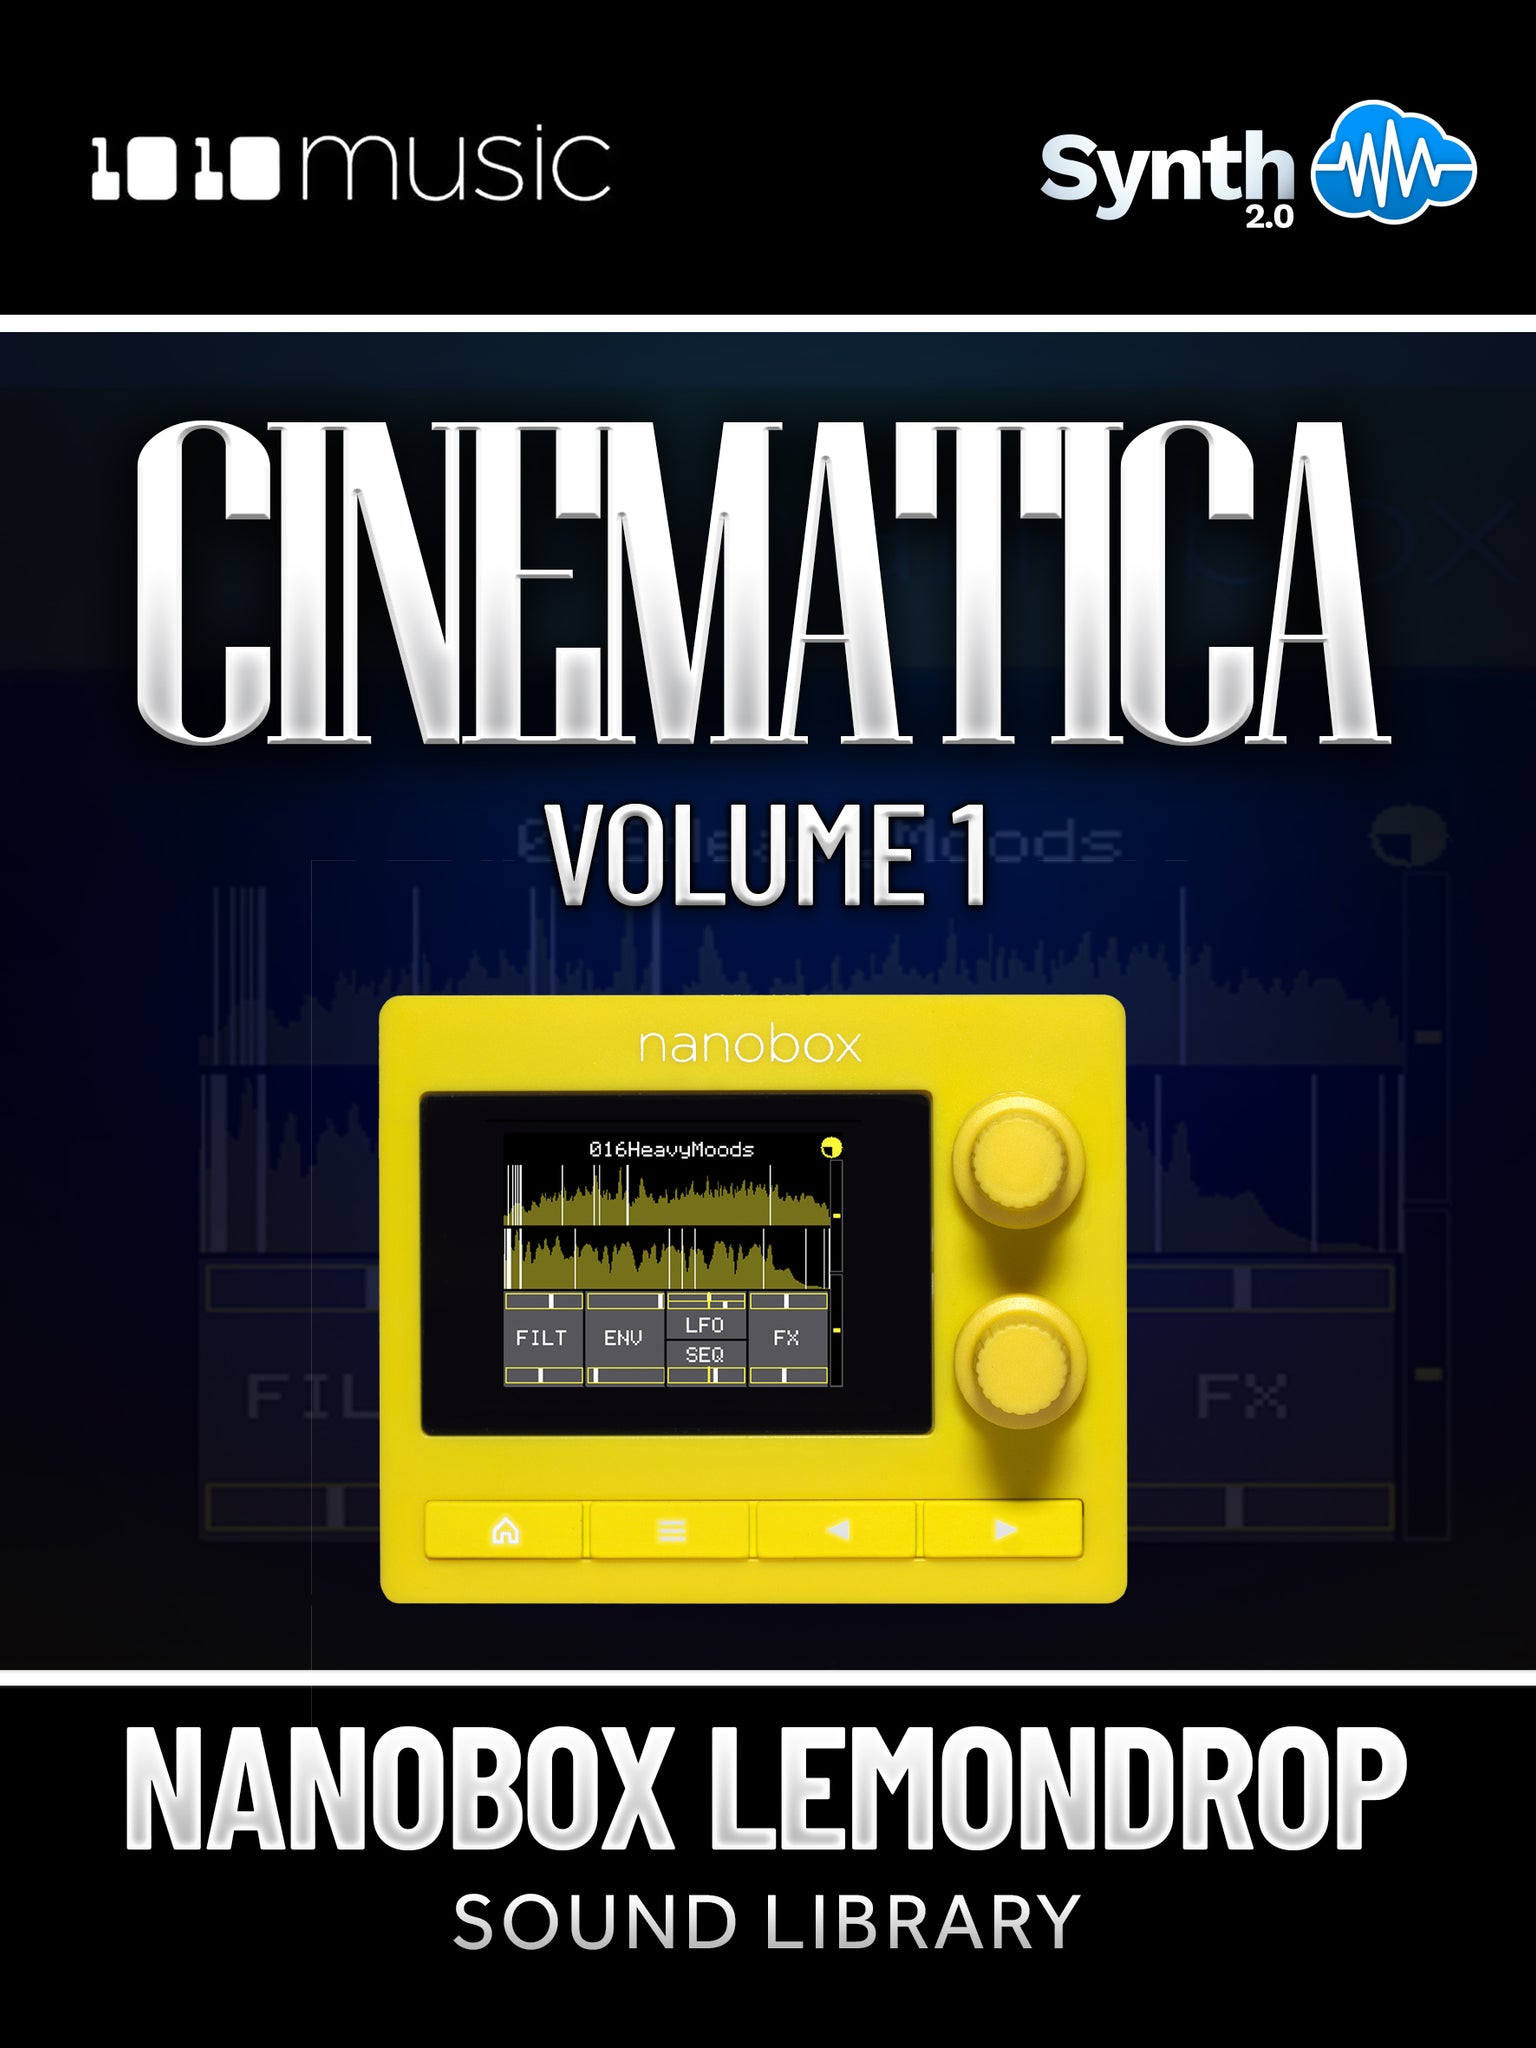 LFO002 Cinematica 1010 Music Nanobox Lemondrop 40 presets| Synthcloud